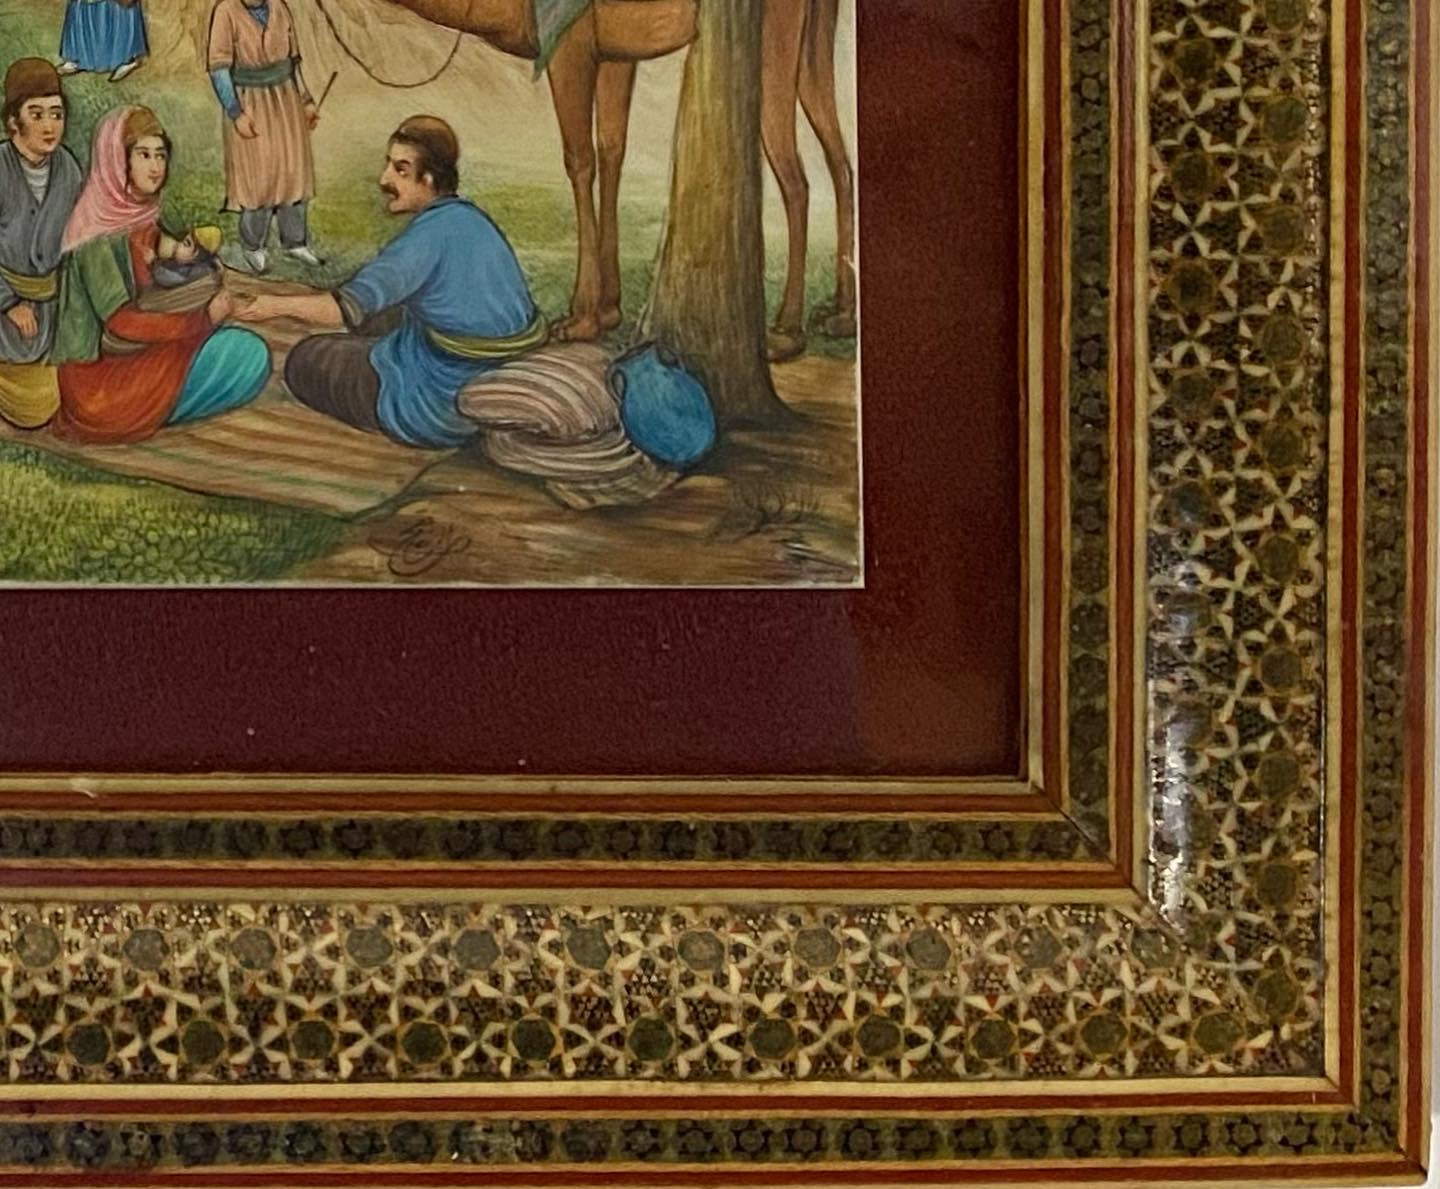 Beautiful antique decorative Khatam frame, hand-painting Iranian miniature, signed, 1920s